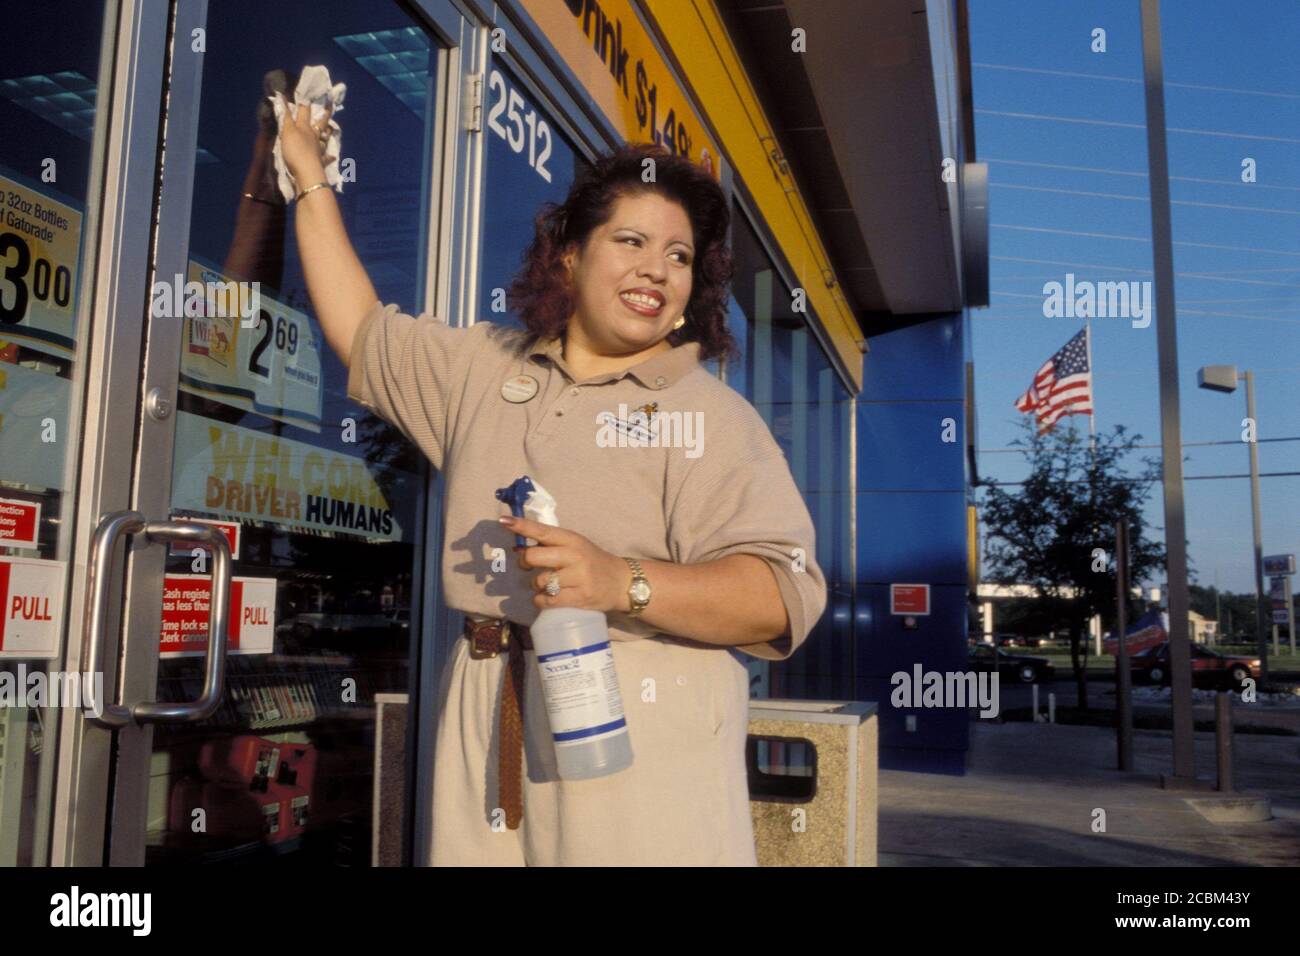 Austin, Texas USA, 2006: Hispanic woman washes windows at an EXXON Mobil convenience store where she is employed as a store clerk. ©Bob Daemmrich Stock Photo